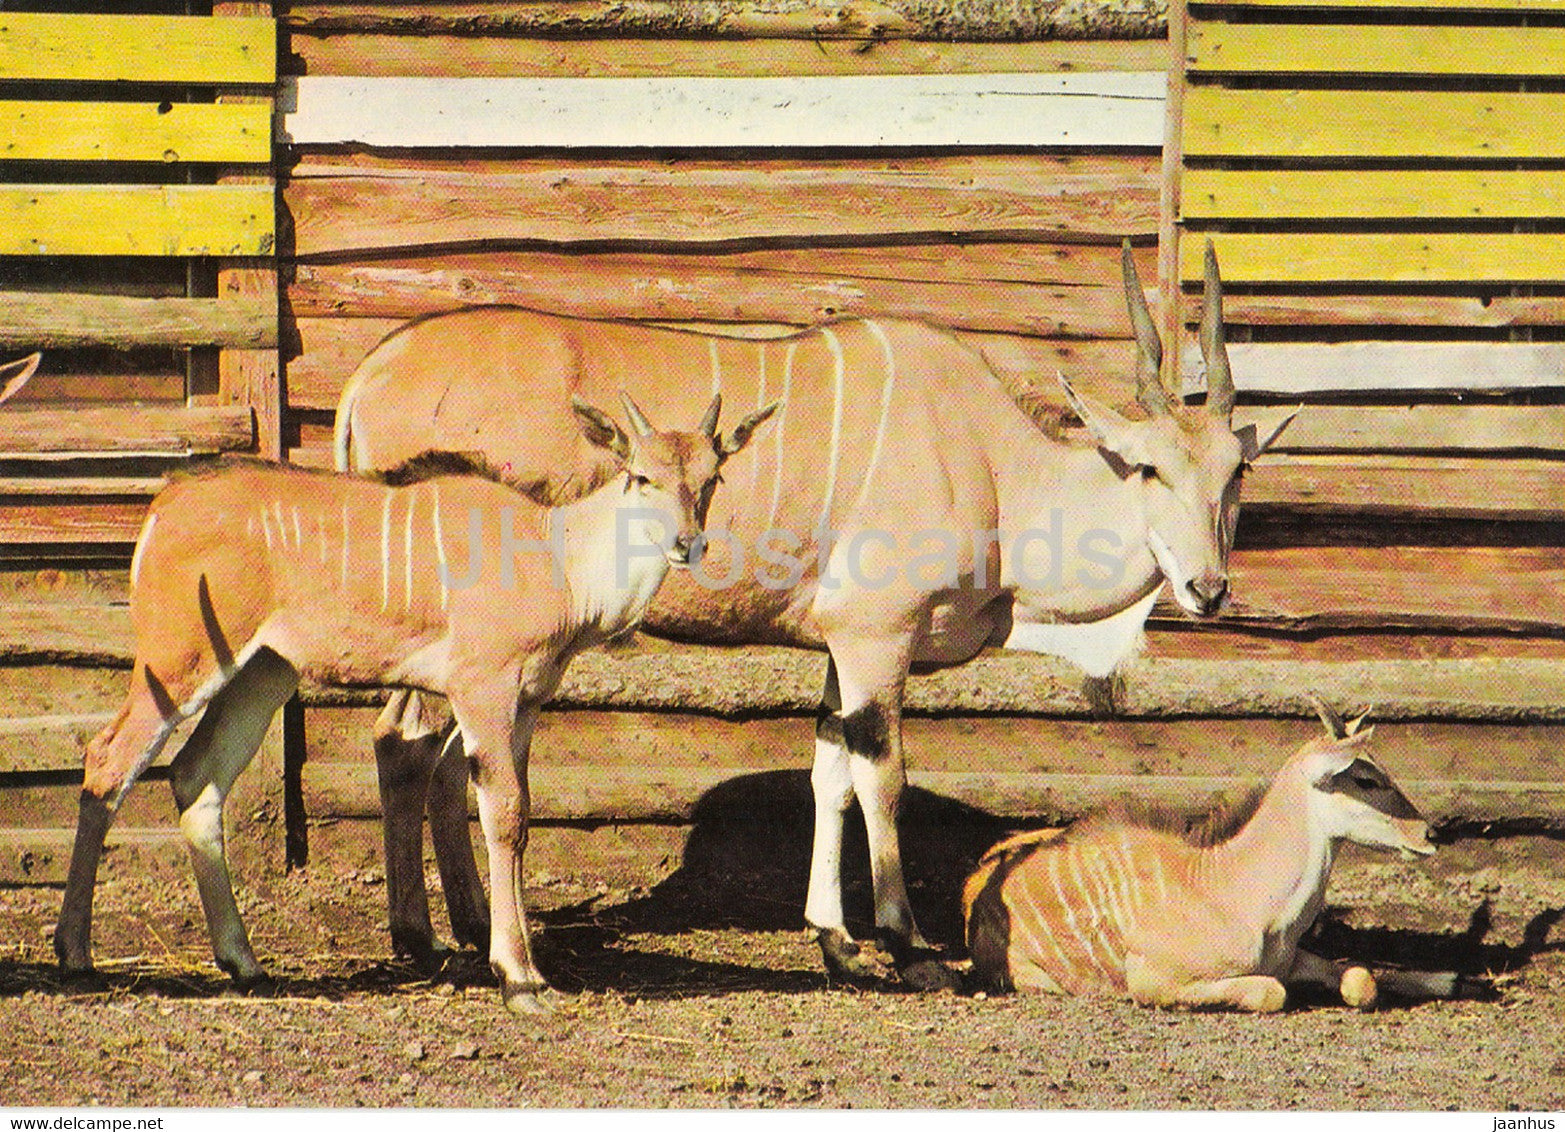 East African Eland - Taurotragus Oryx Pattersonianius - animals - Zoo - Czechoslovakia - unused - JH Postcards